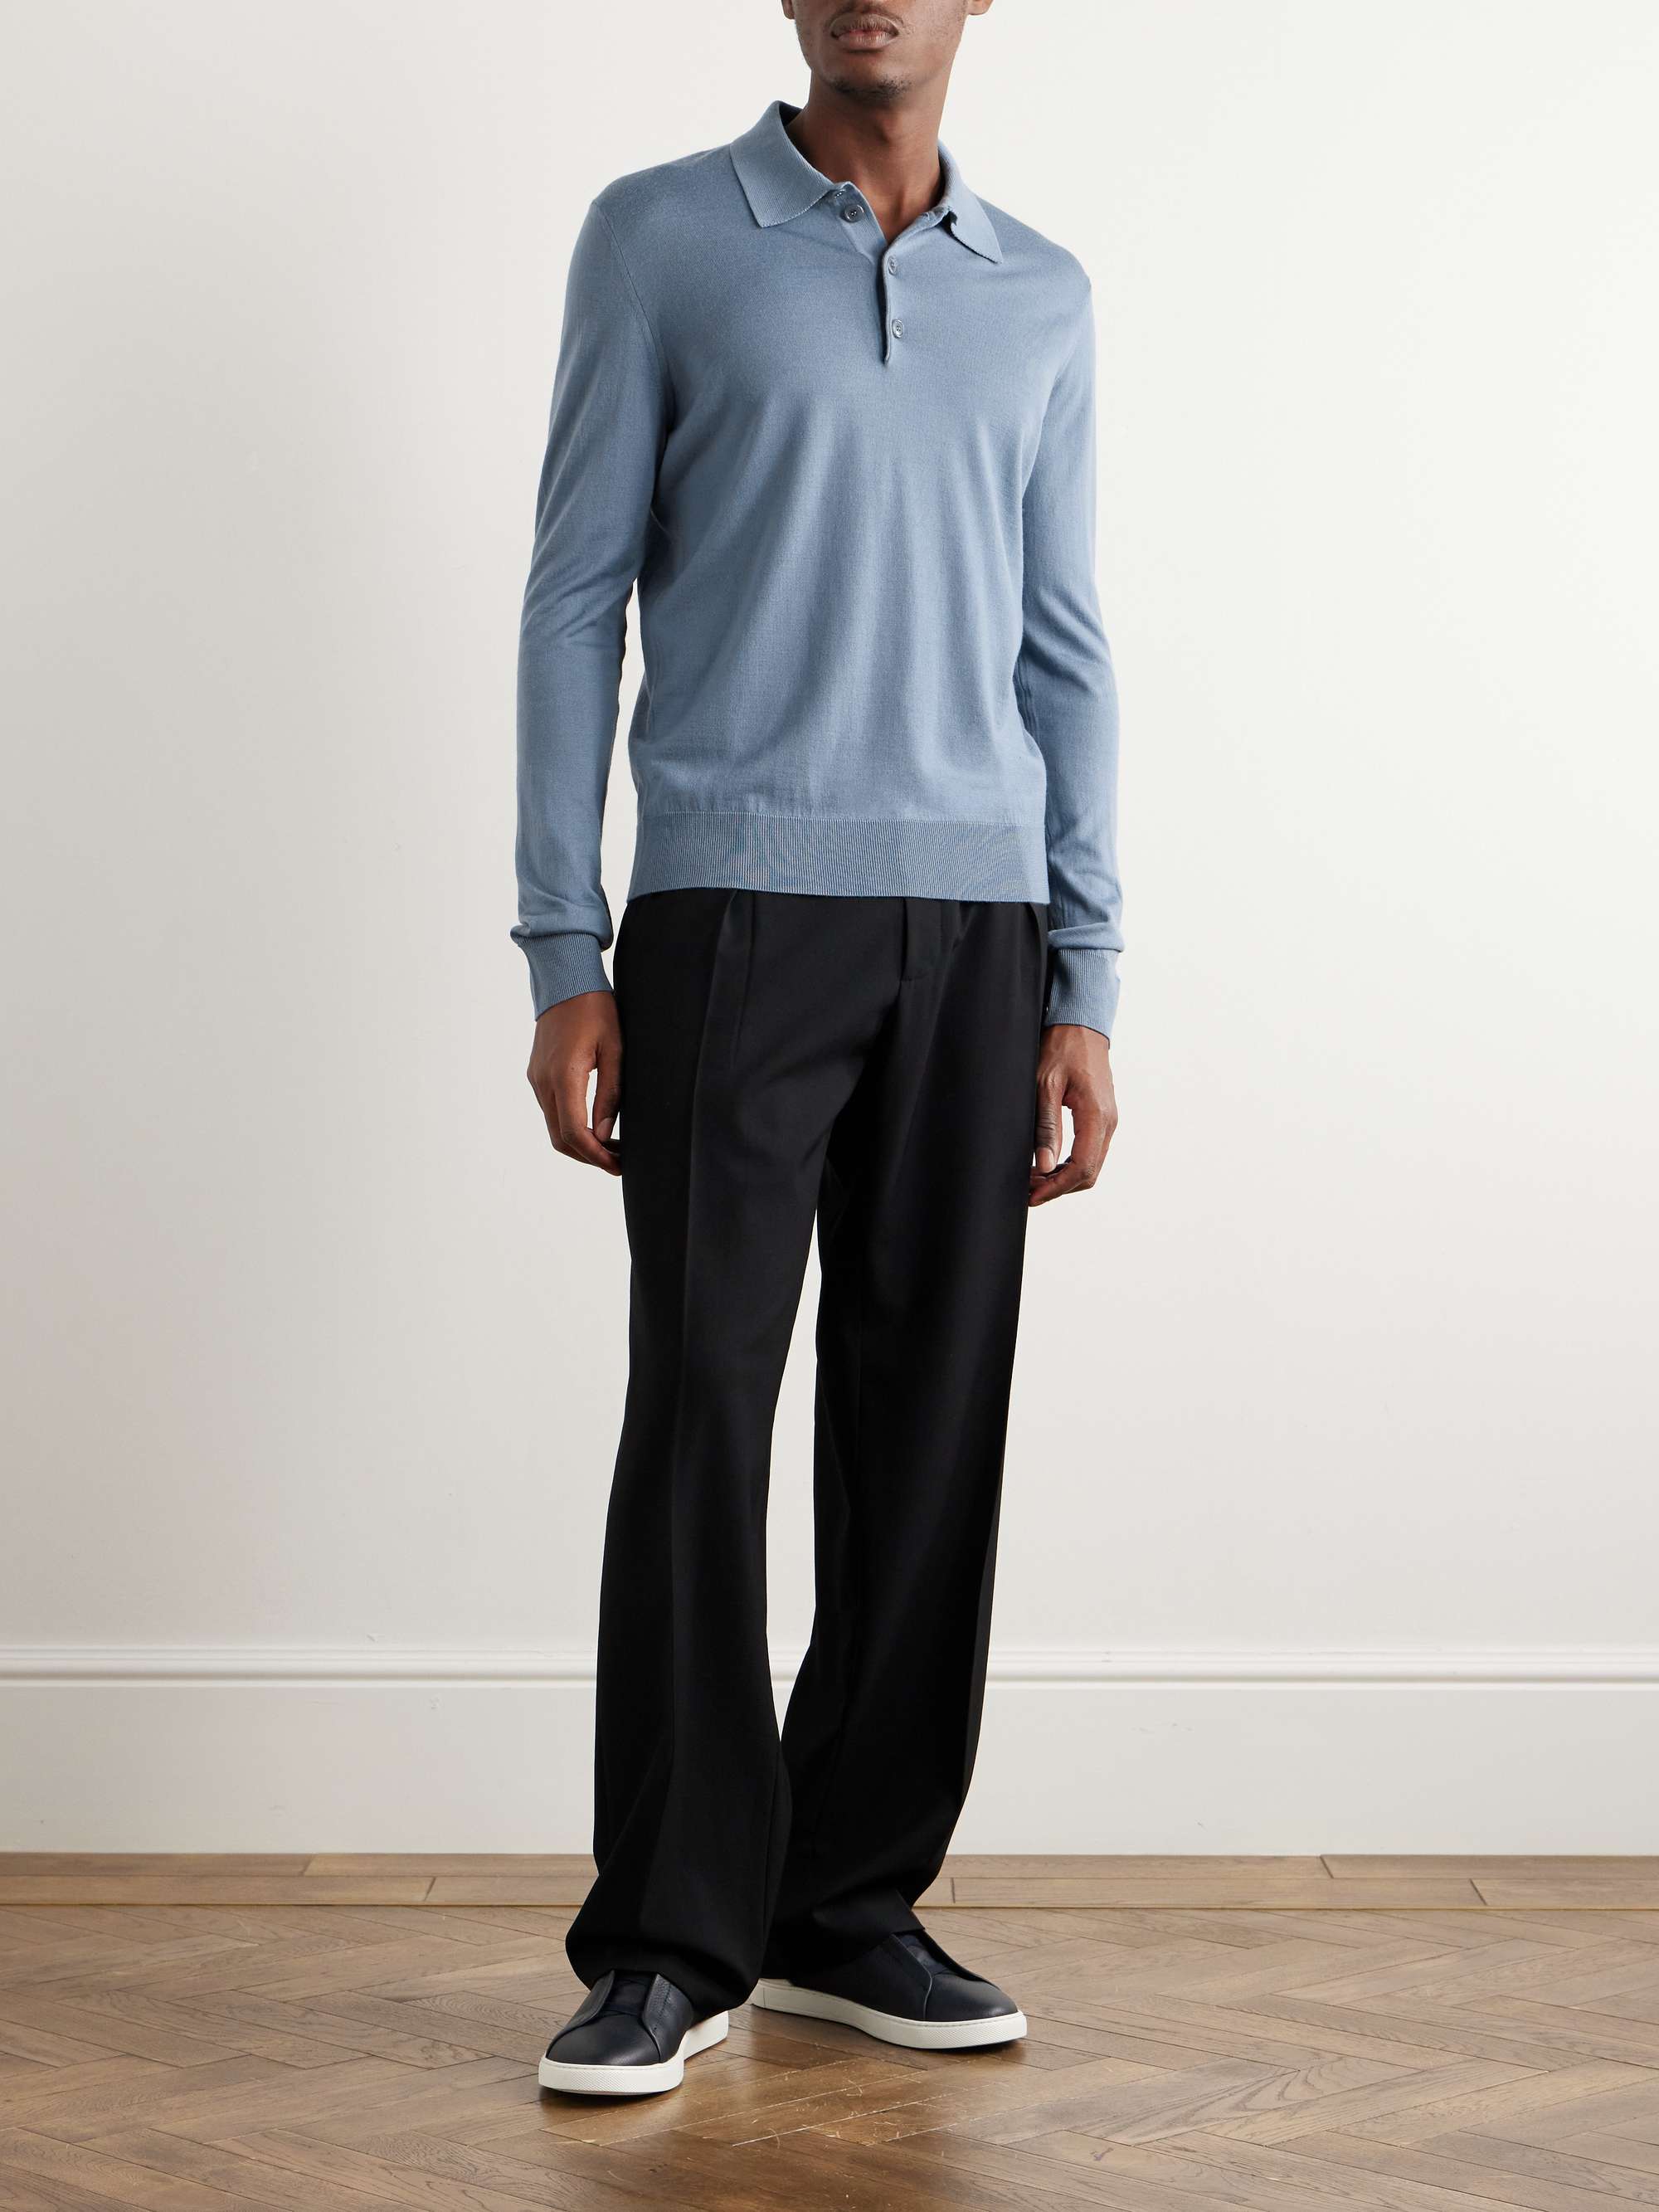 GIORGIO ARMANI Wool Polo Shirt for Men | MR PORTER